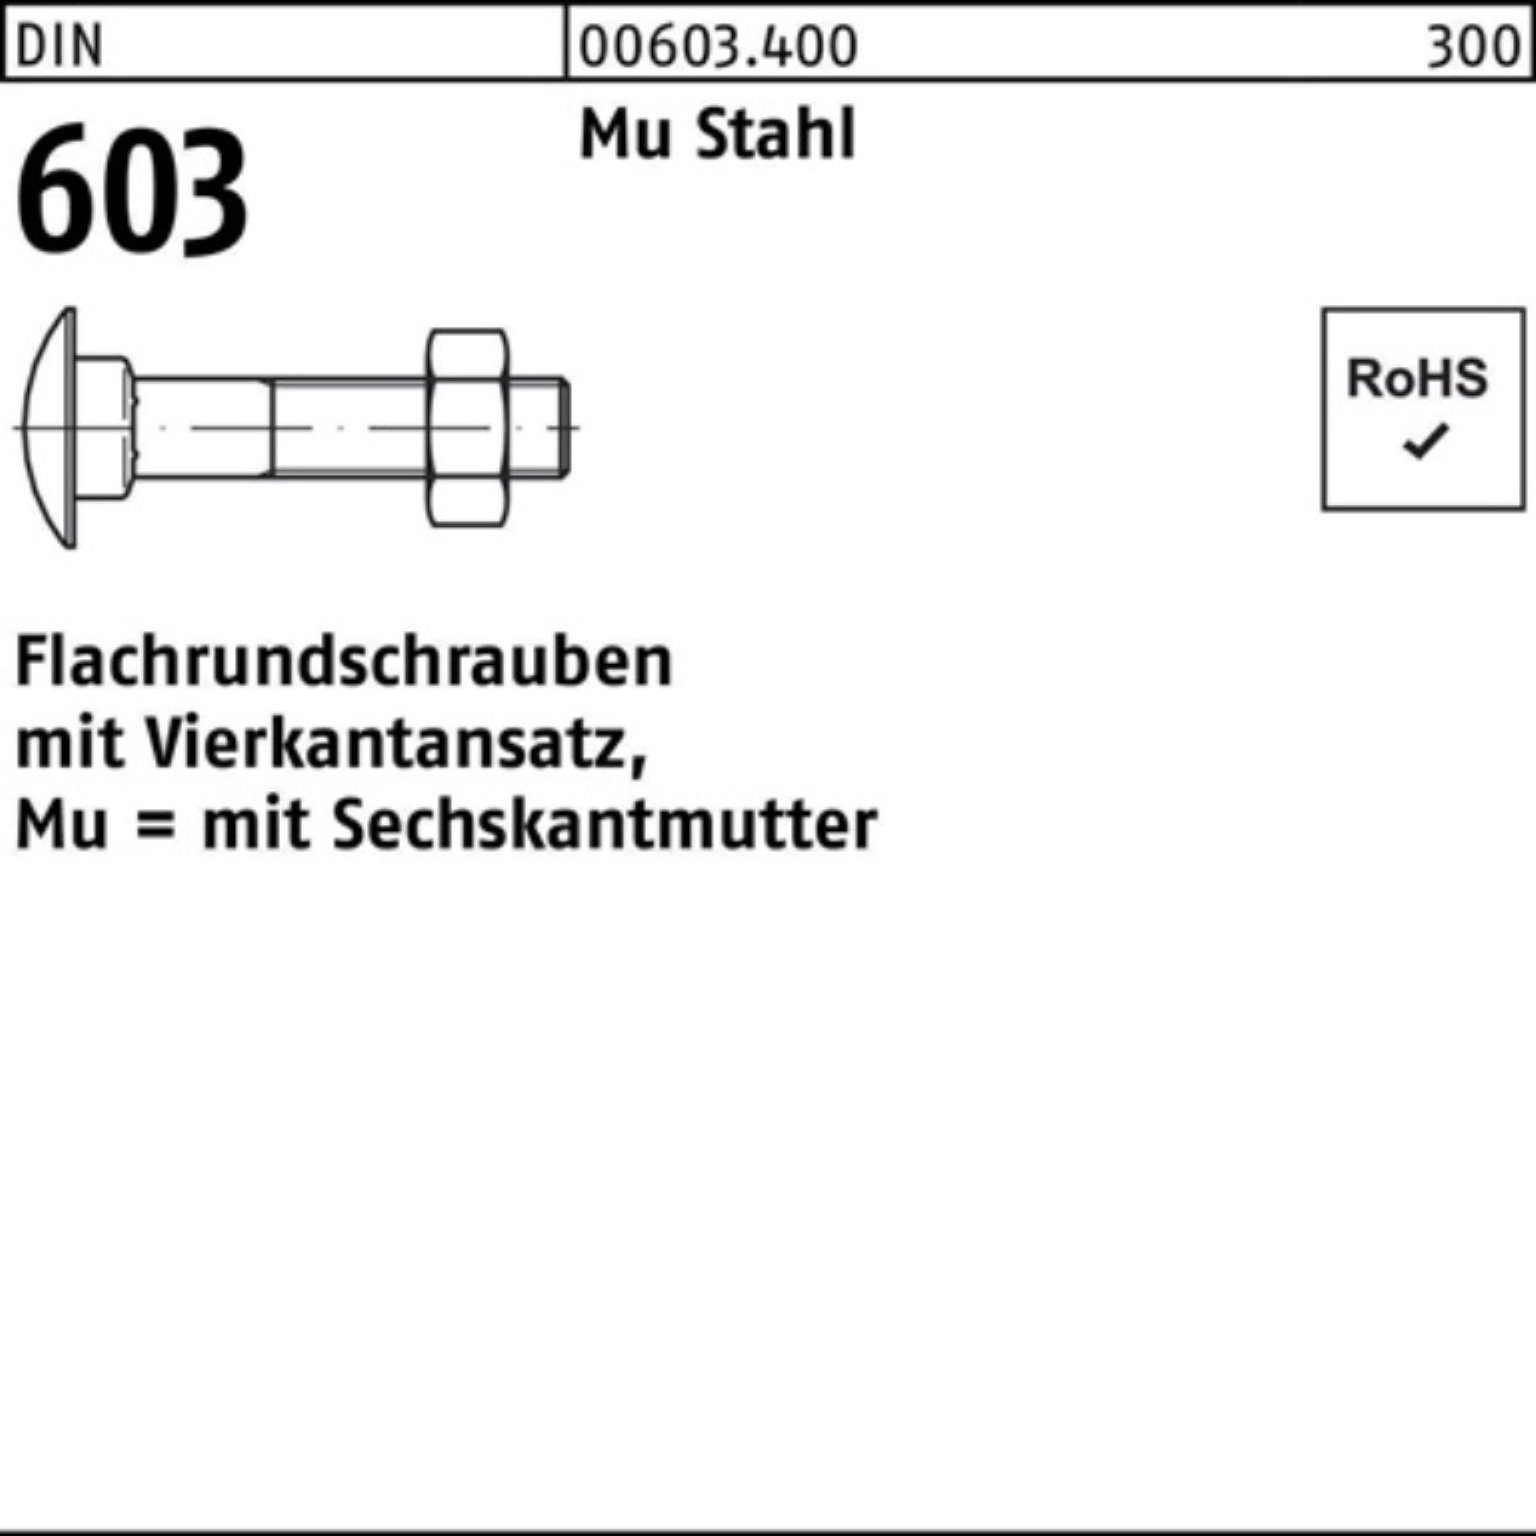 Reyher Schraube 100er 603 Flachrundschraube M8x160 DIN Pack Vierkantansatz/6-ktmutter